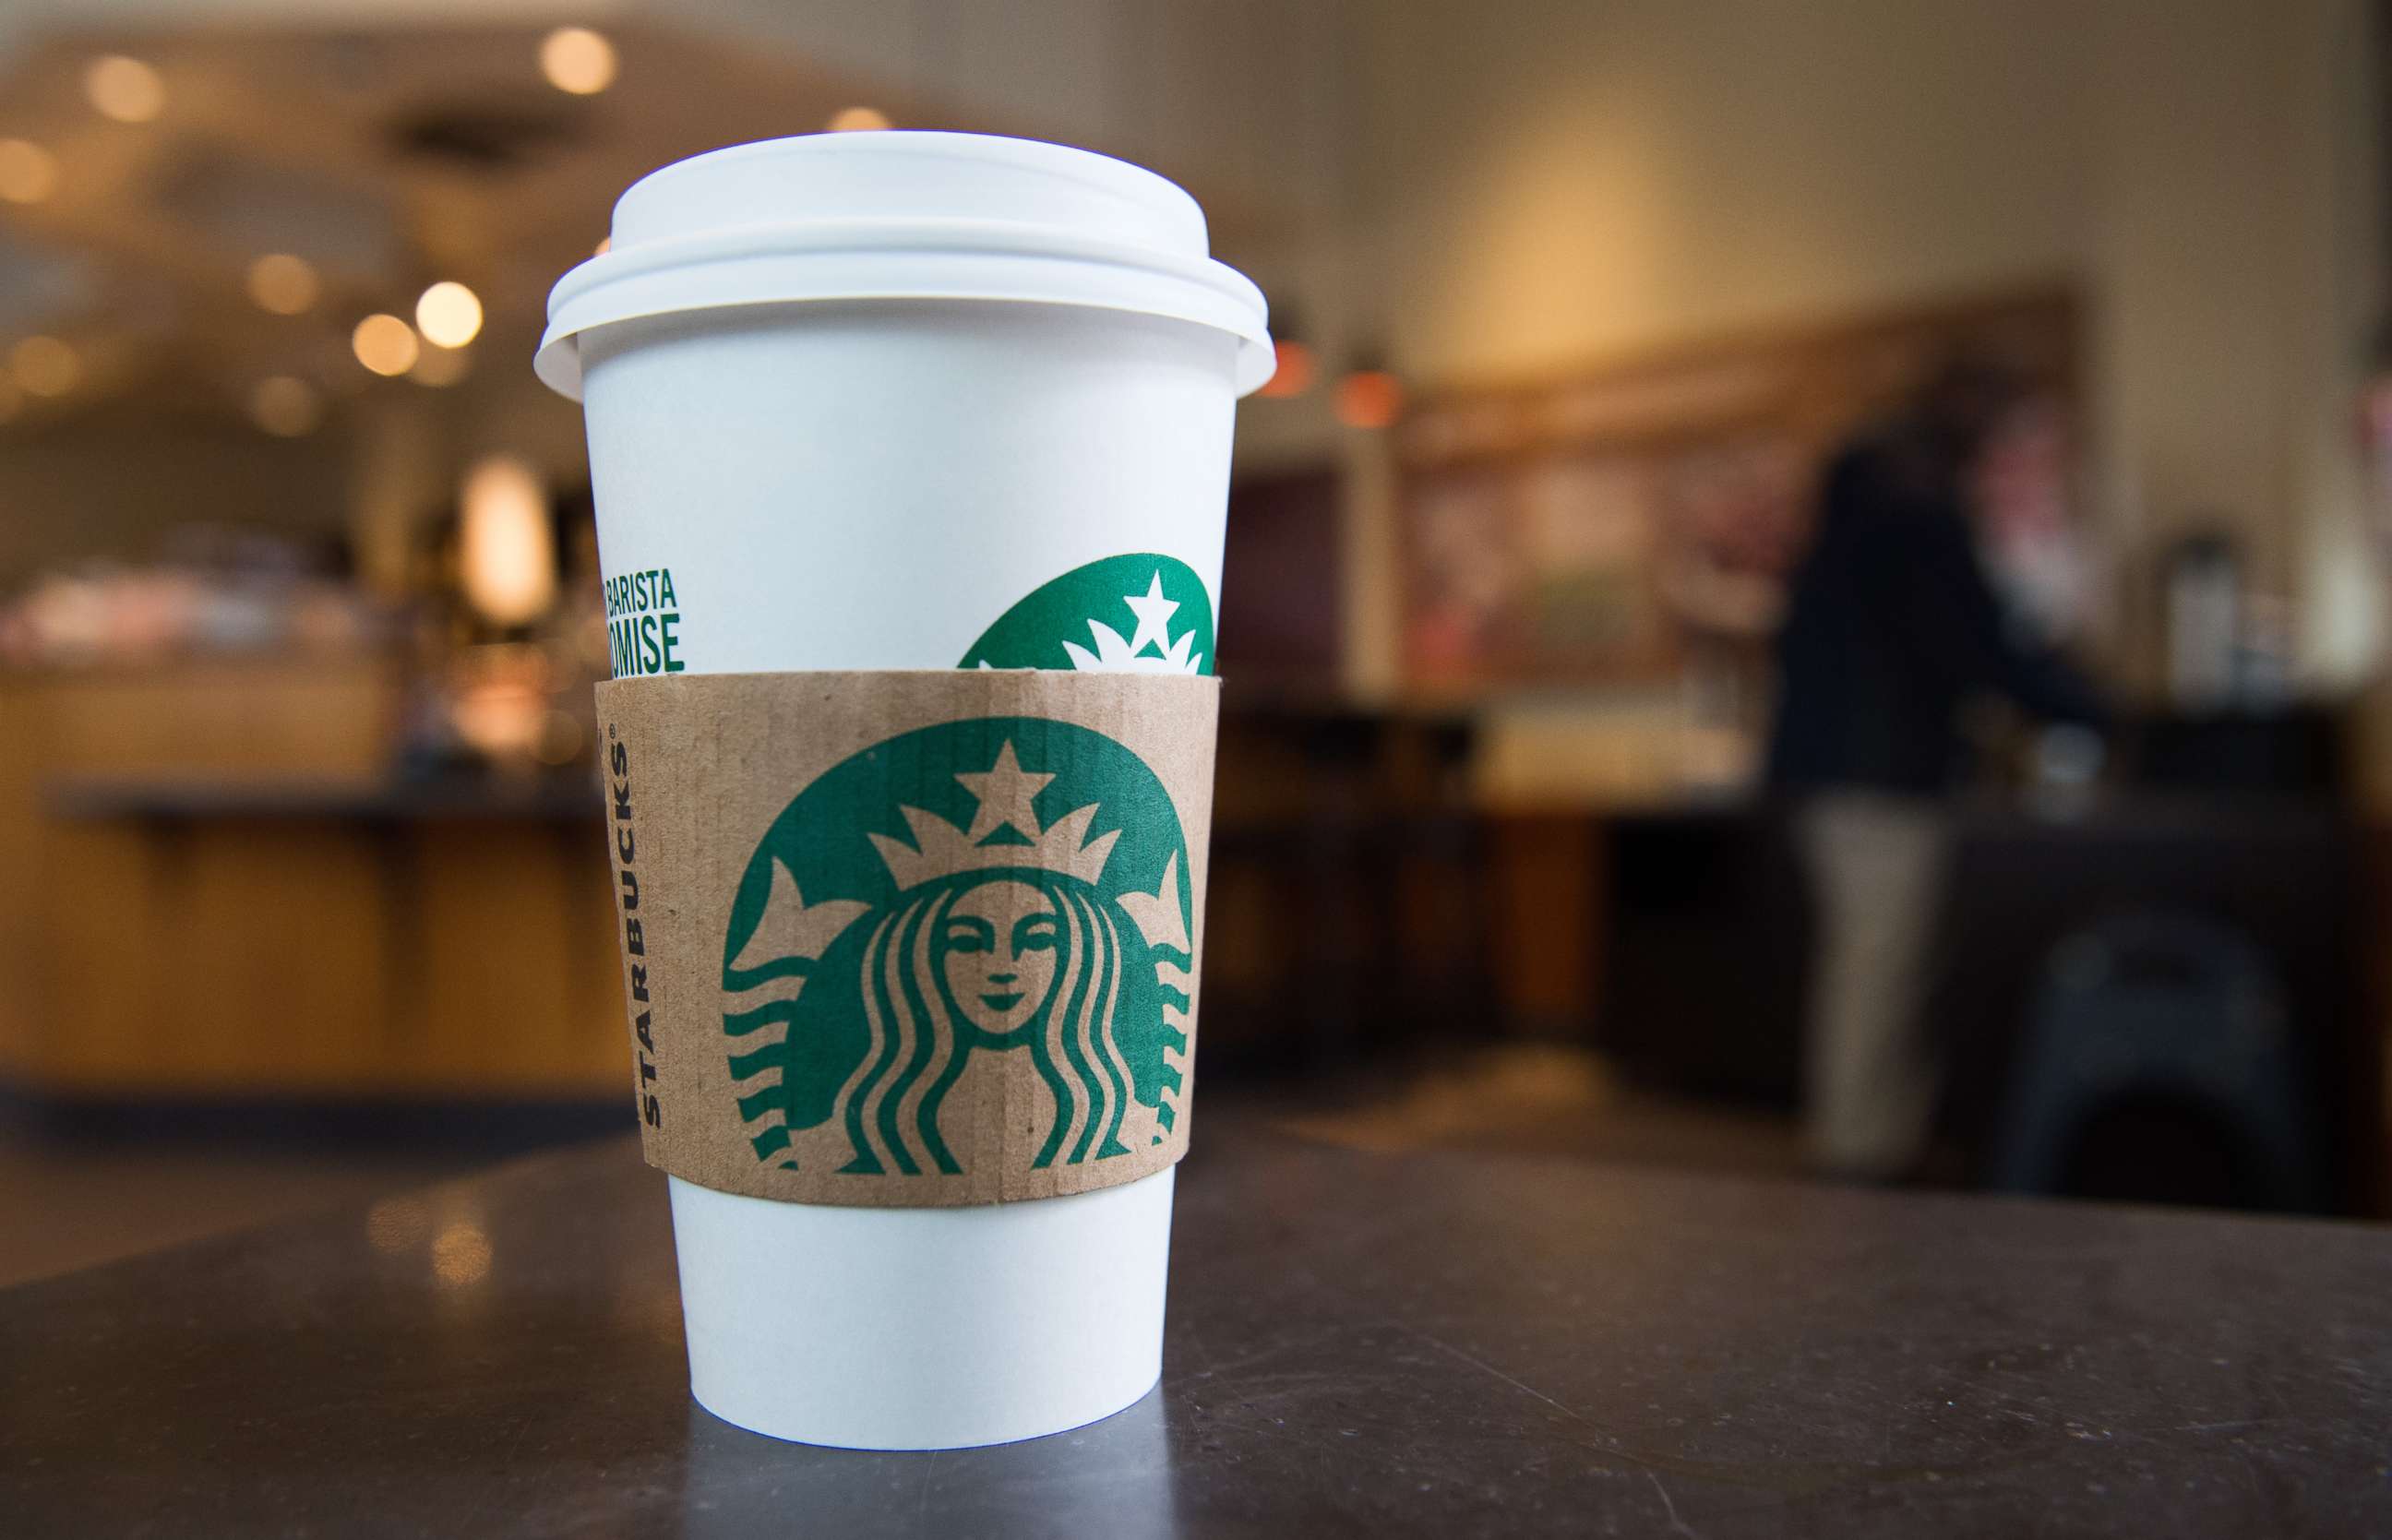 PHOTO: A Starbucks coffee cup is seen inside a Starbucks Coffee shop in Washington, DC.